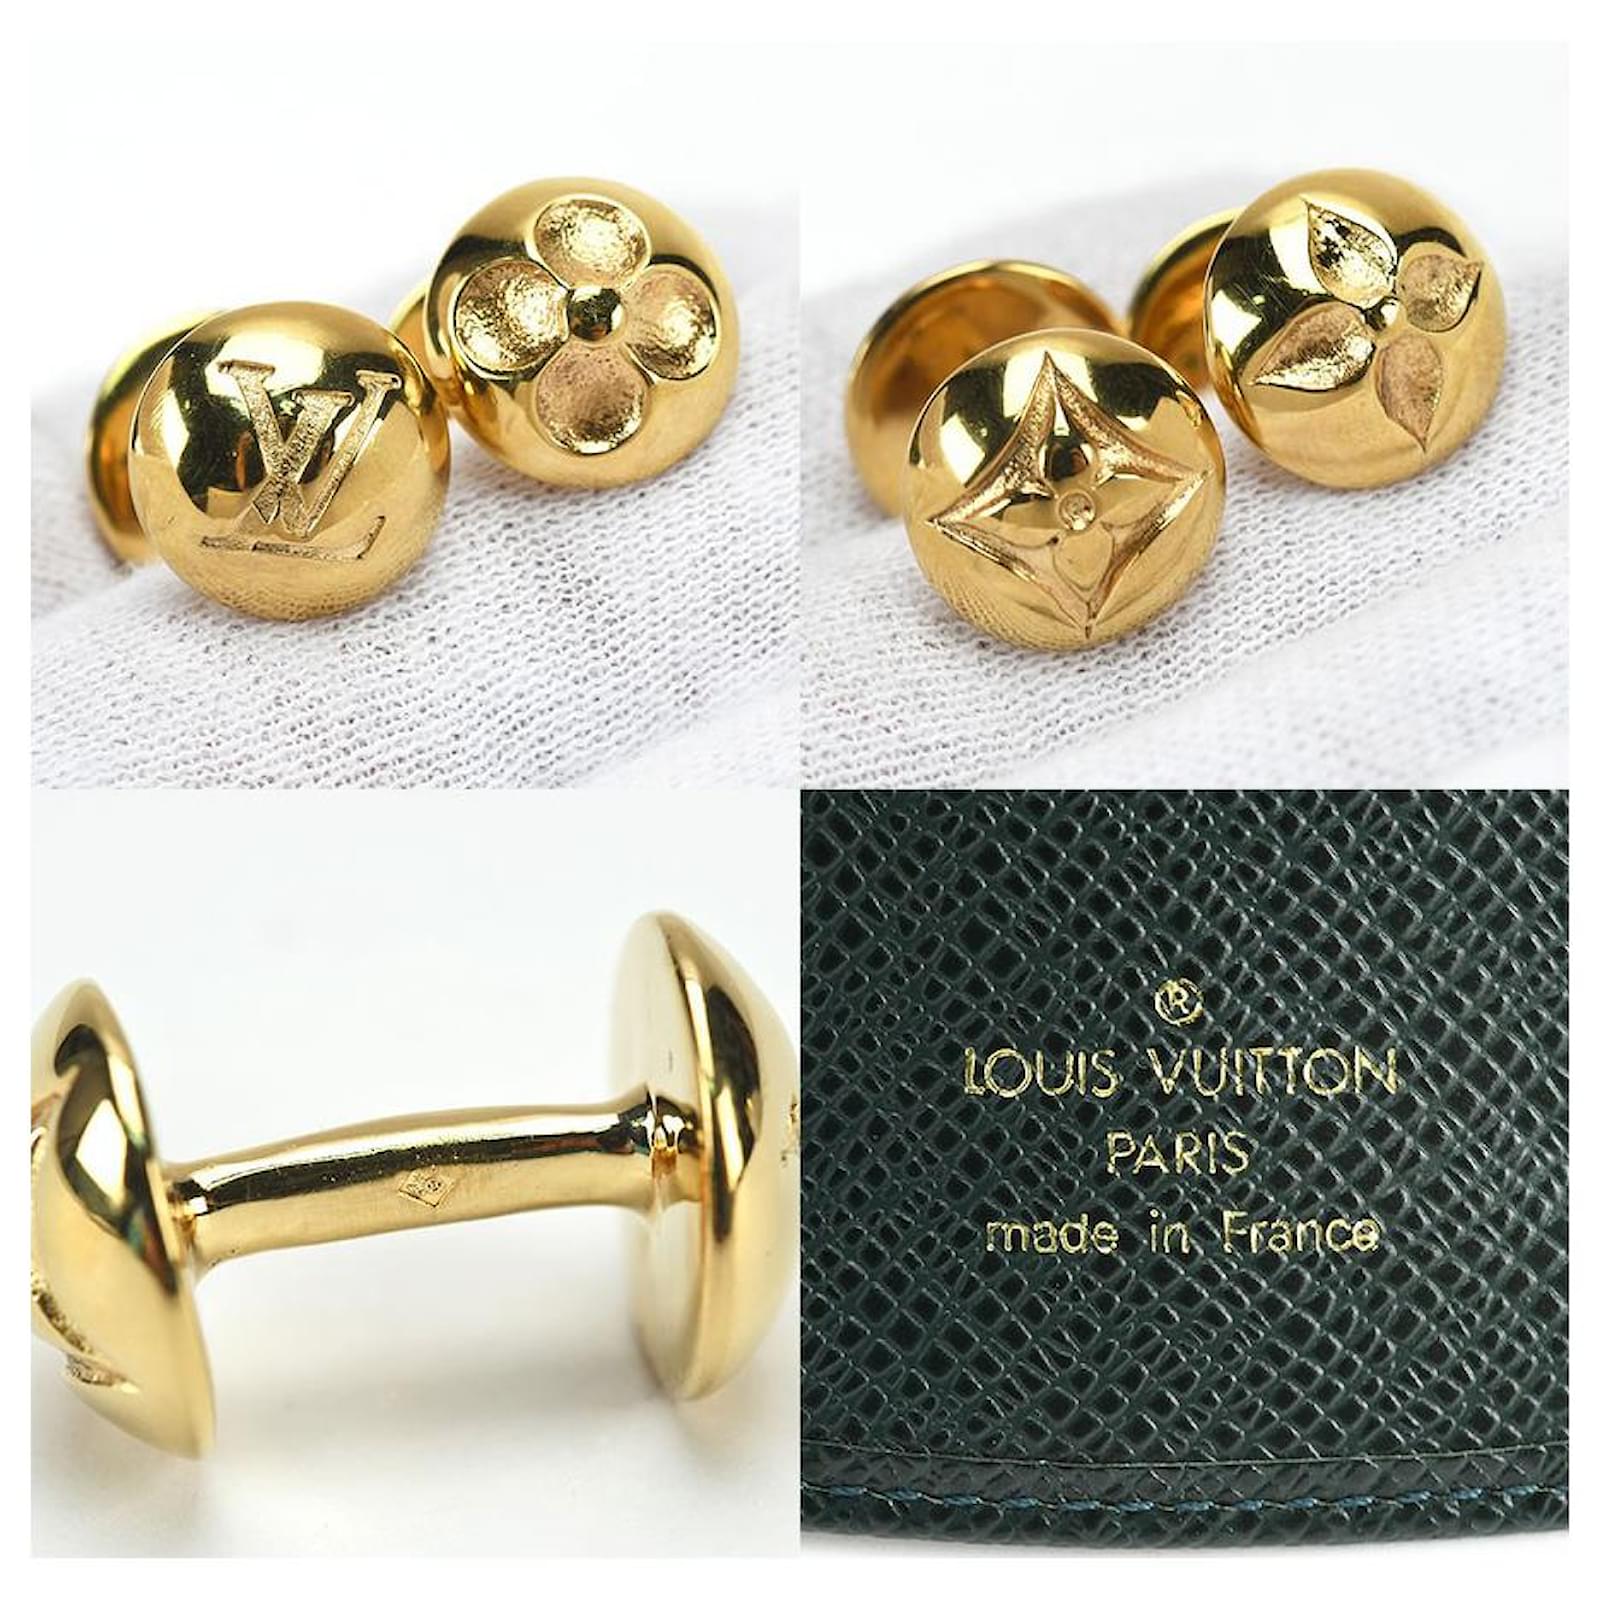 Used] Louis Vuitton LOUIS VUITTON Cufflinks Buton de Manchette